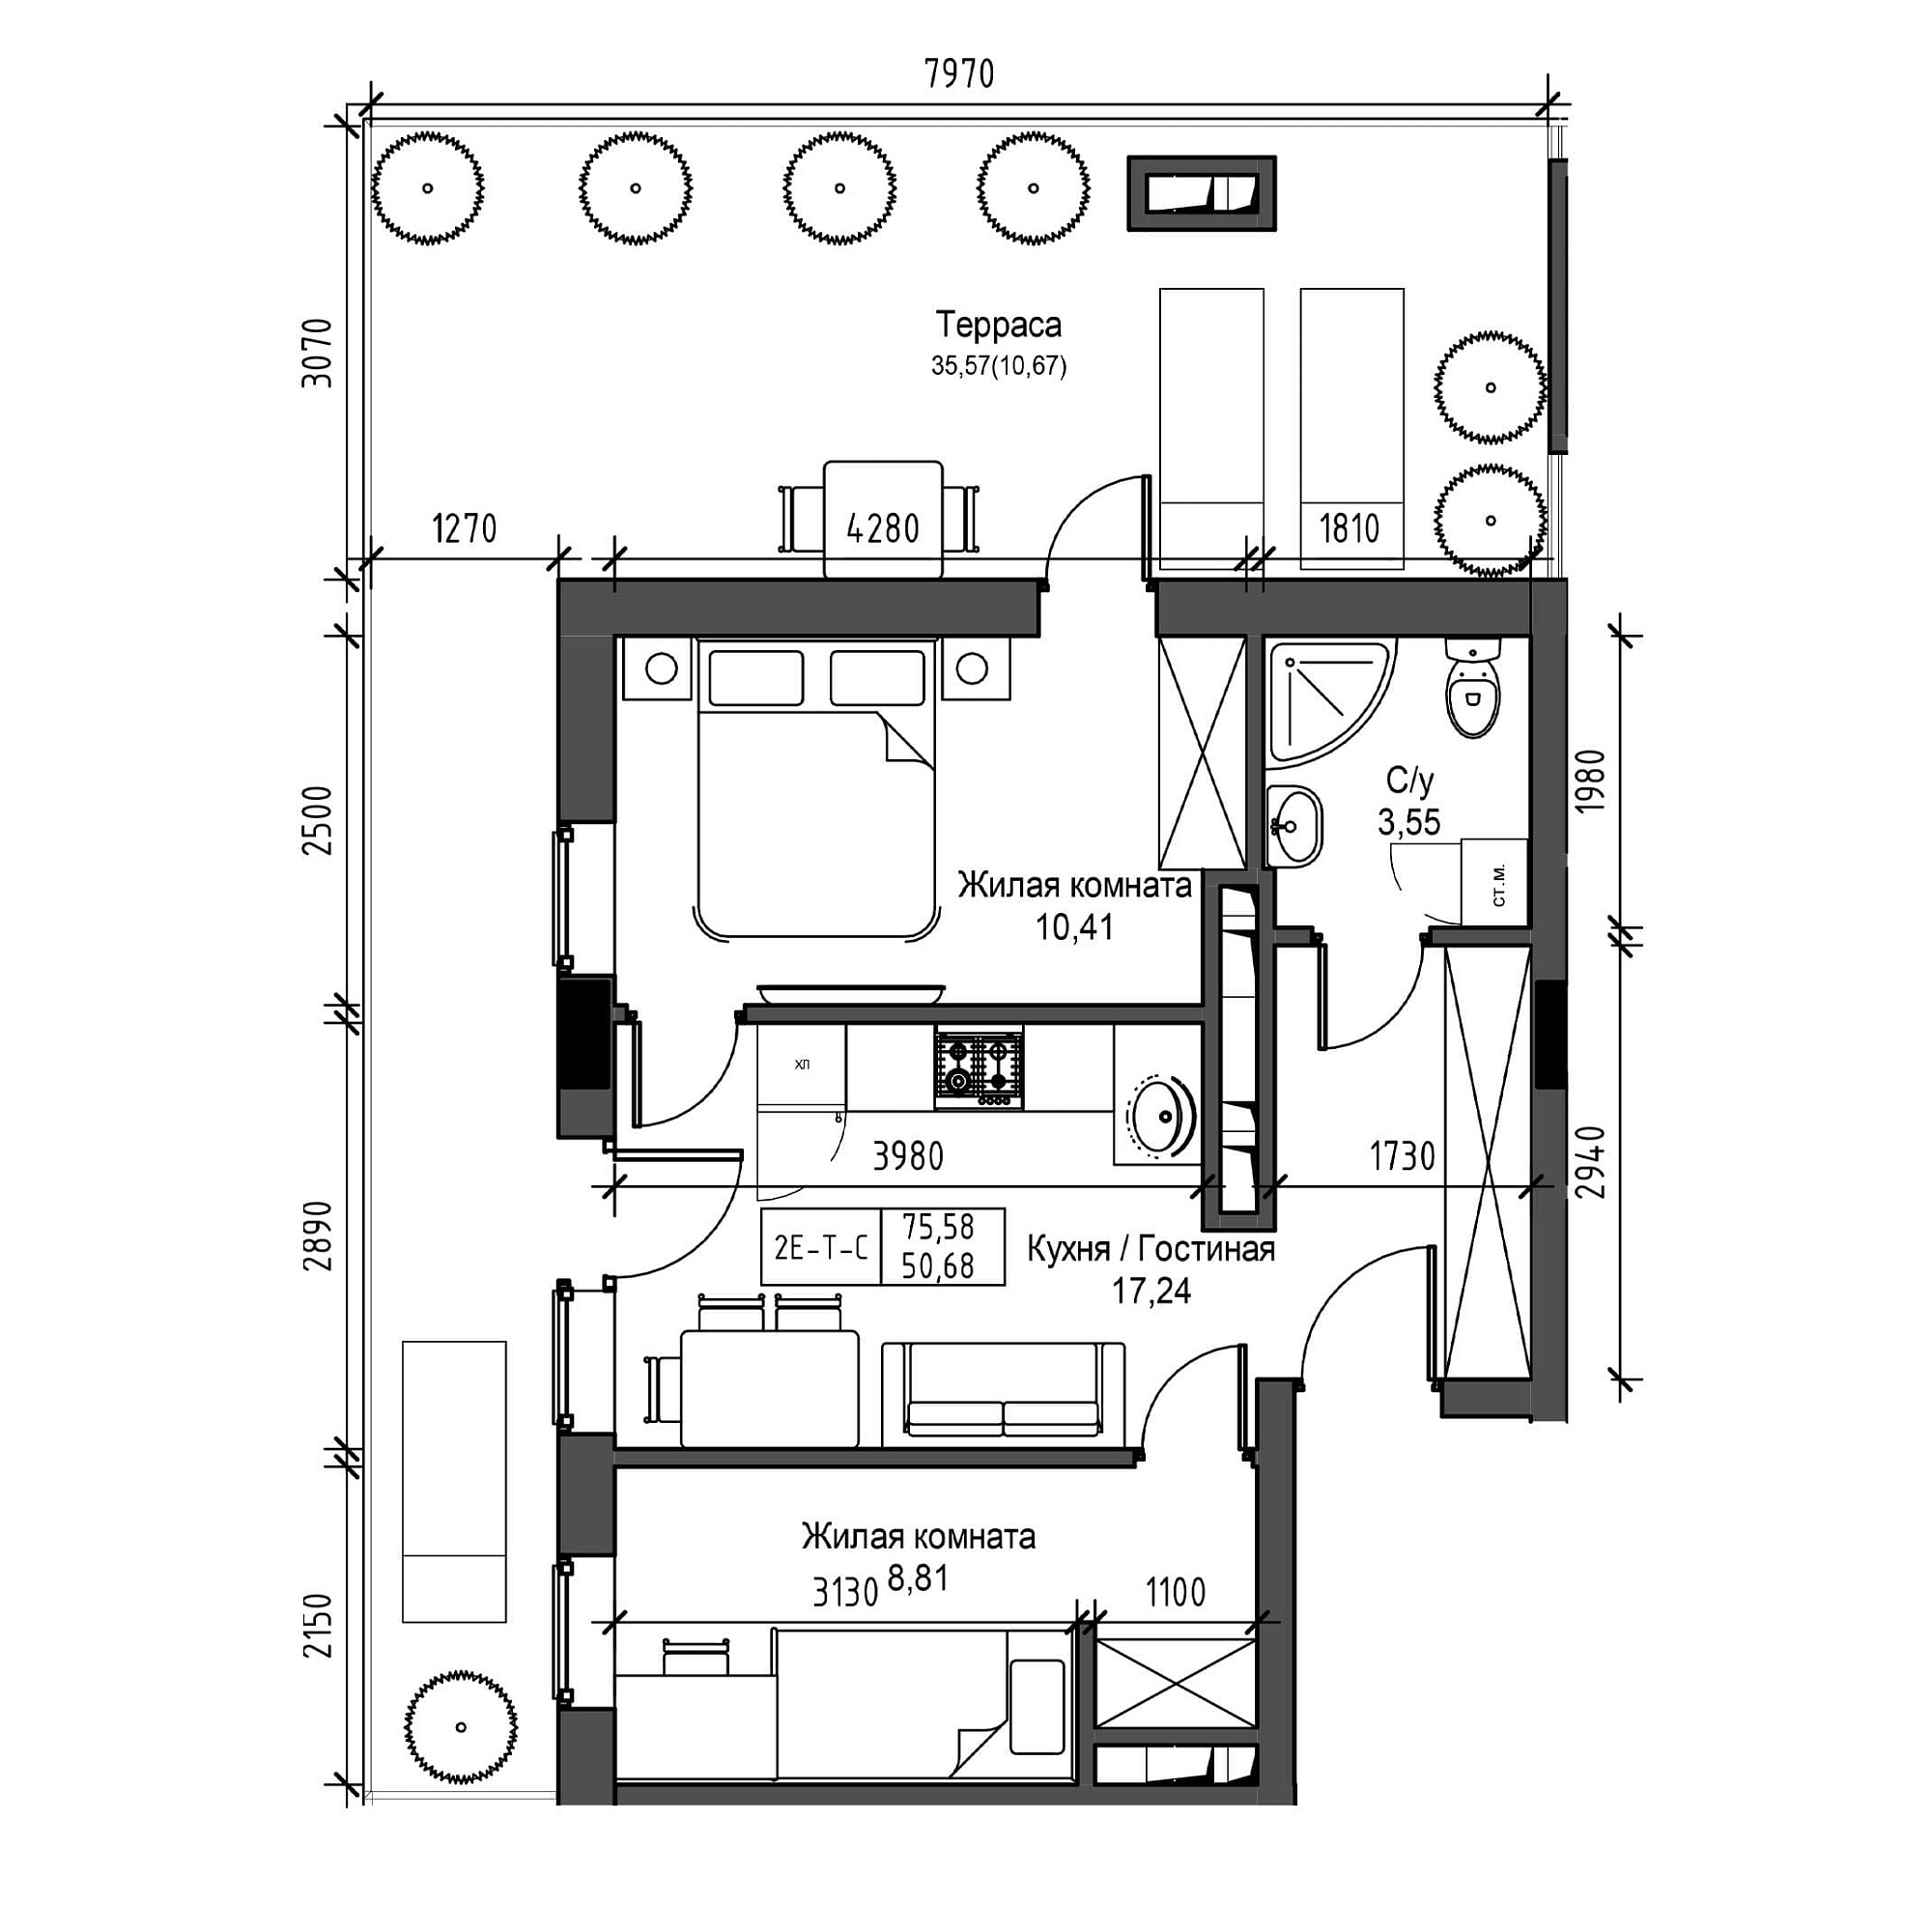 Планування 2-к квартира площею 50.68м2, UM-001-08/0018.